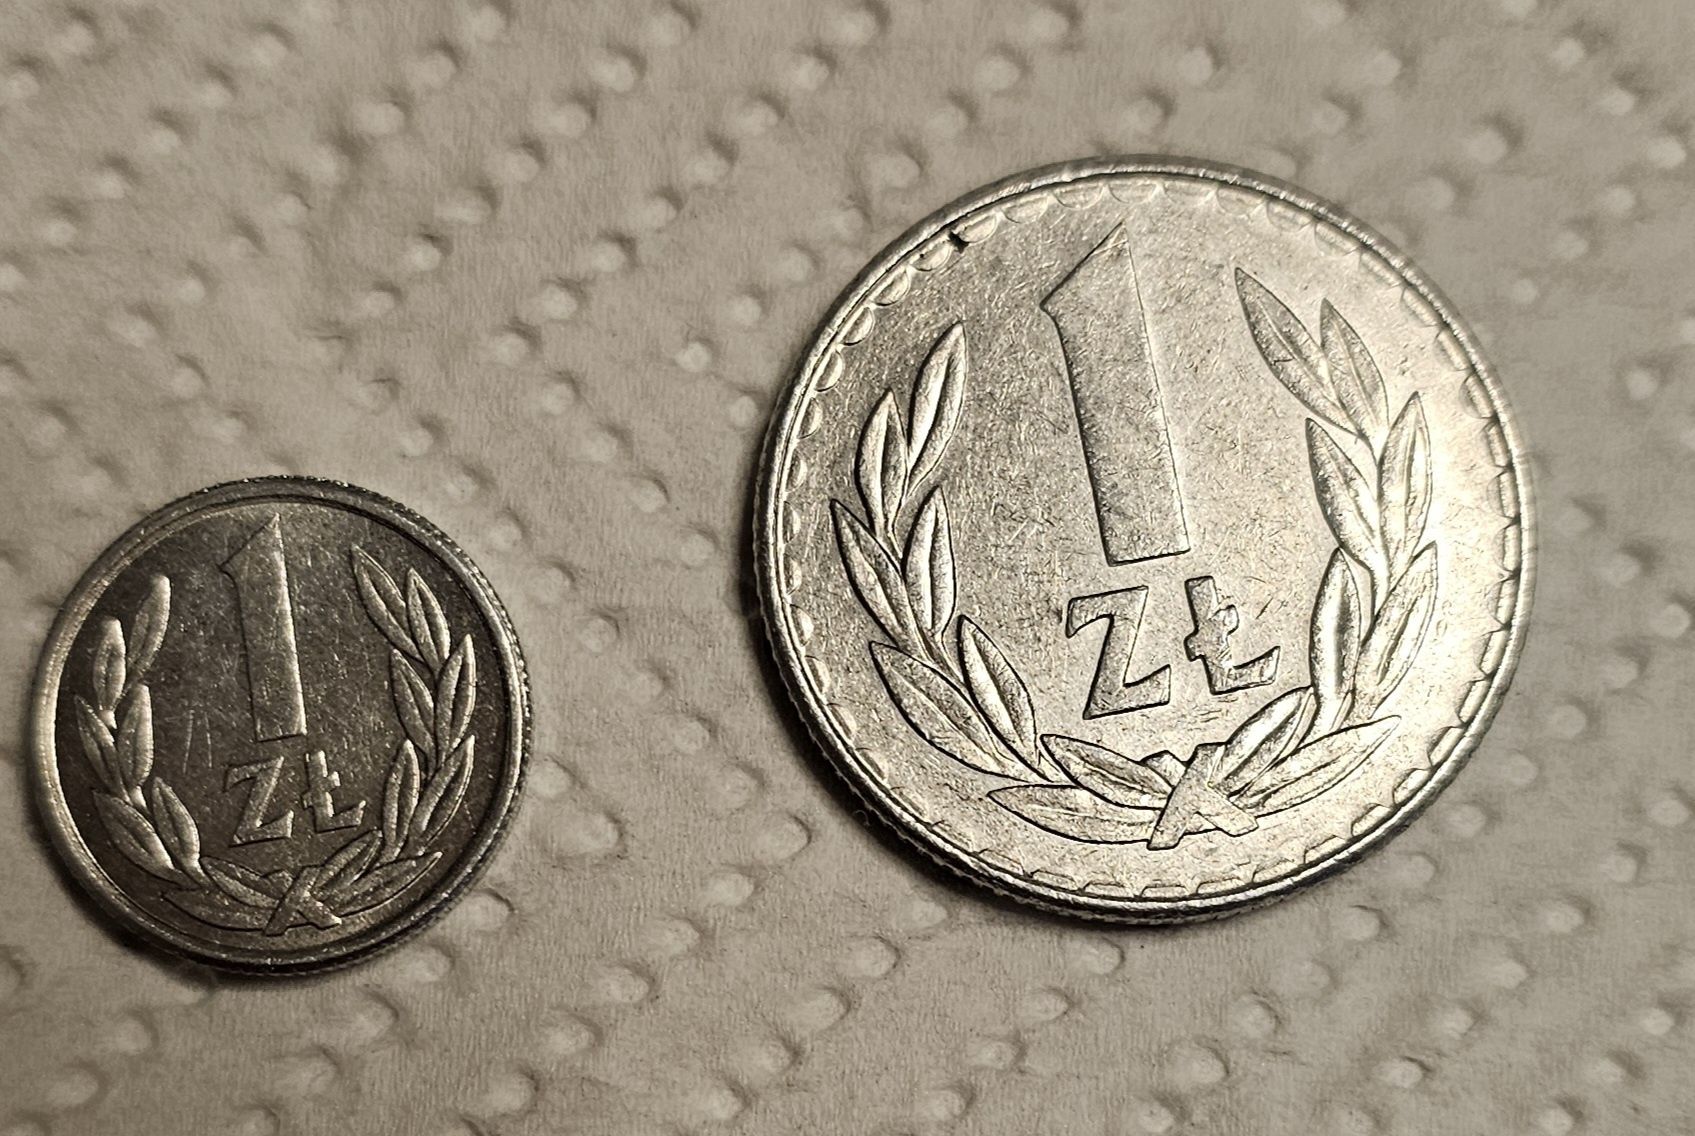 Moneta 1 zł.1987 i 1zl. 1990